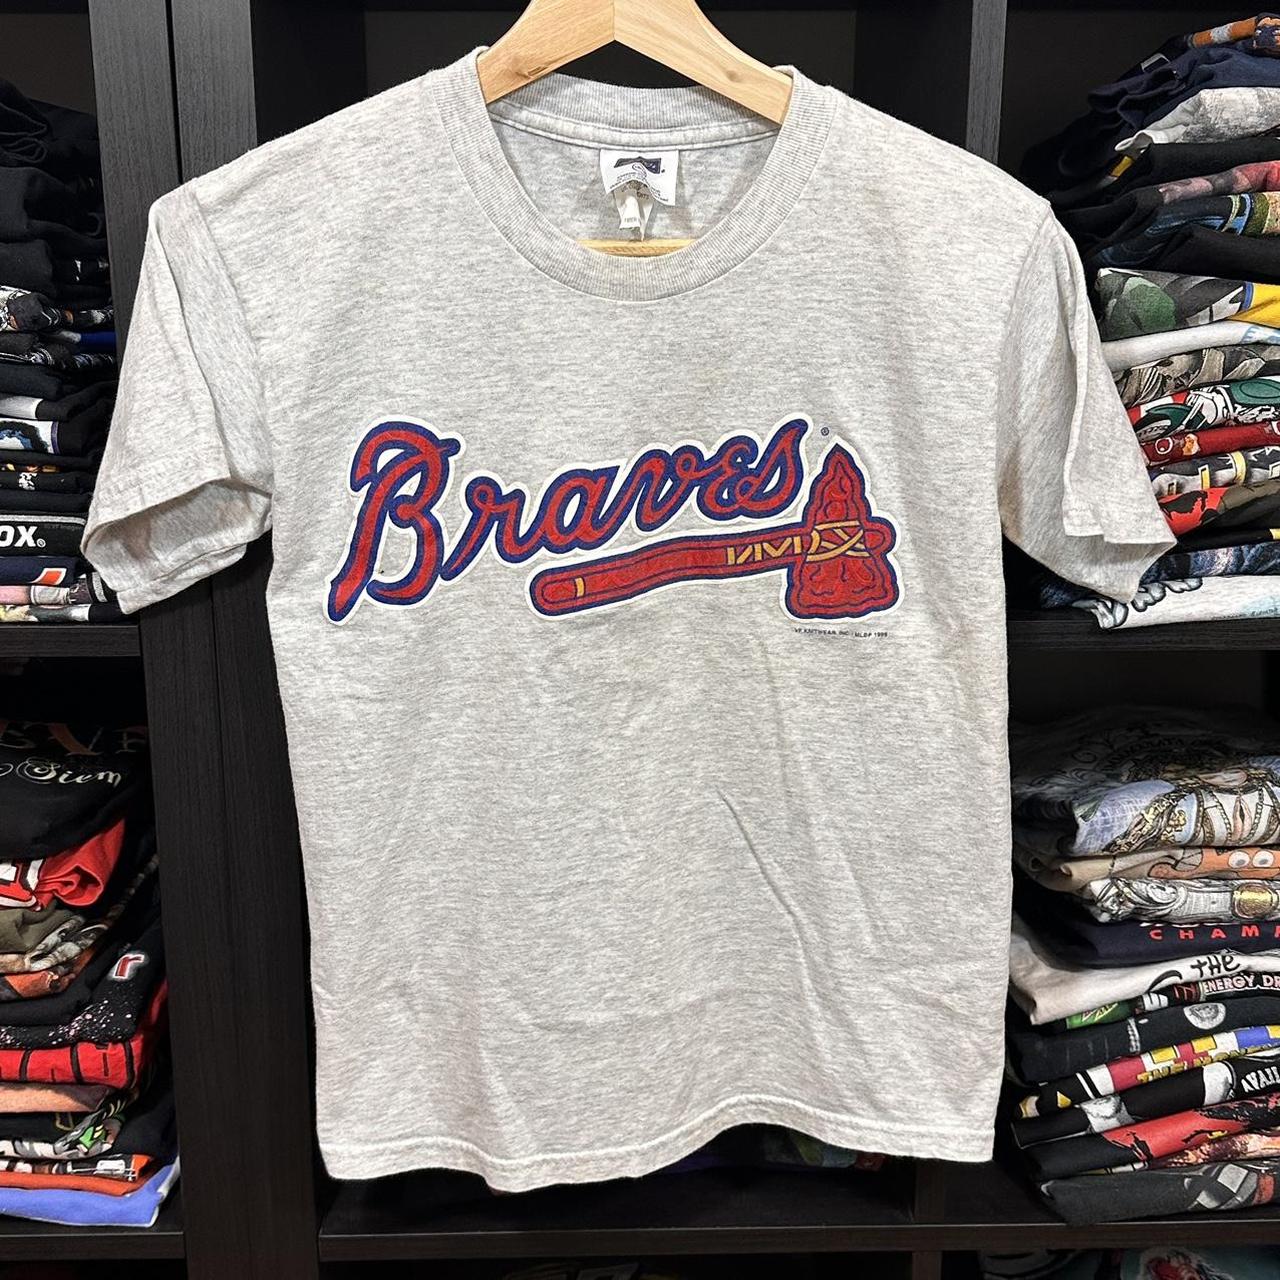 Youth Atlanta Braves Shirt 